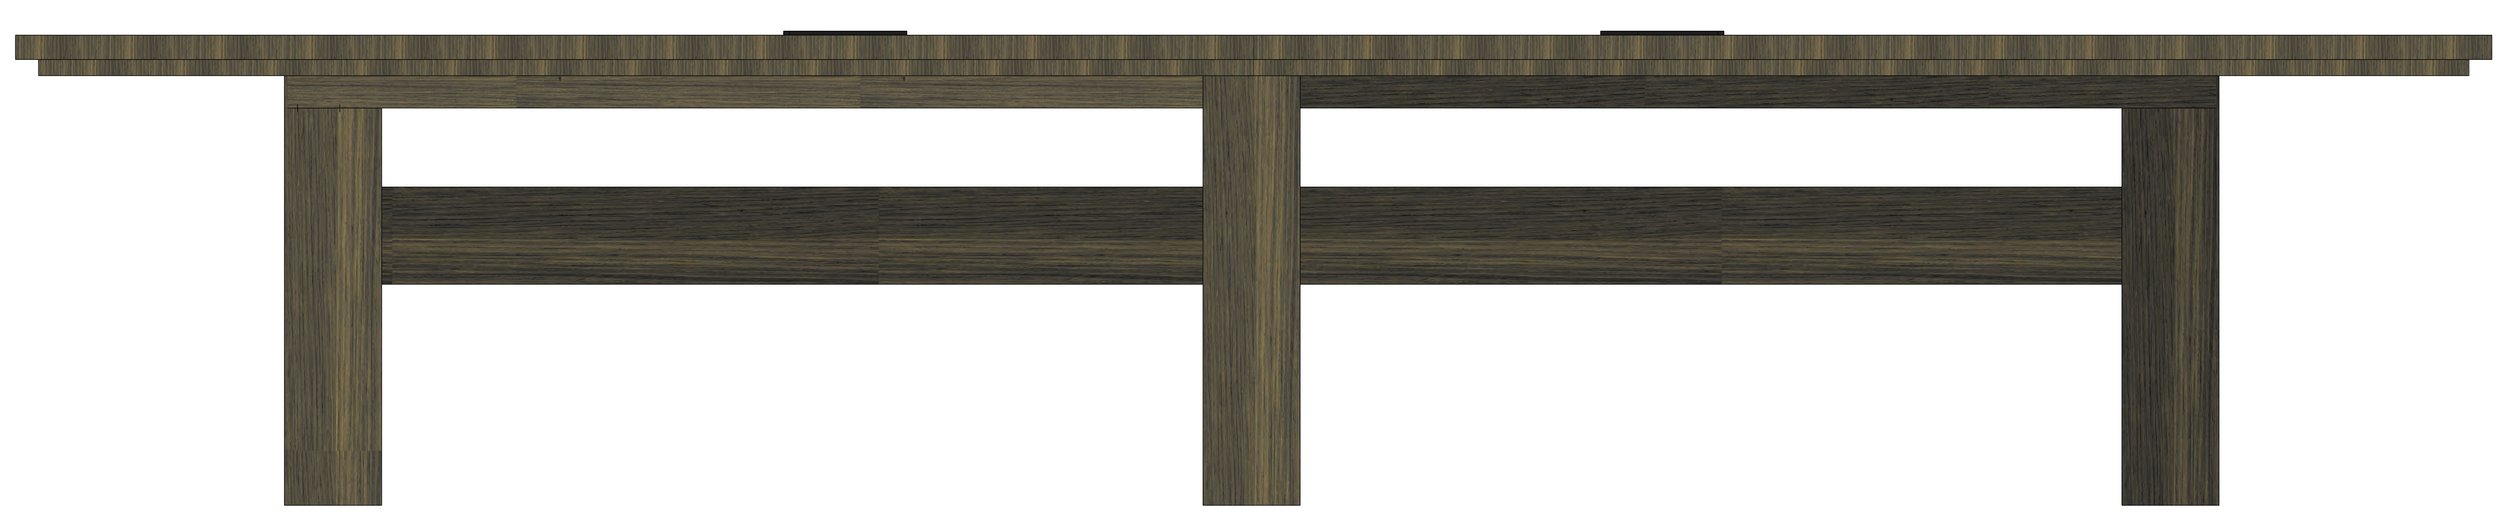 SkB - Product - Furniture - McKinsey Touchdown Tables -5.jpg